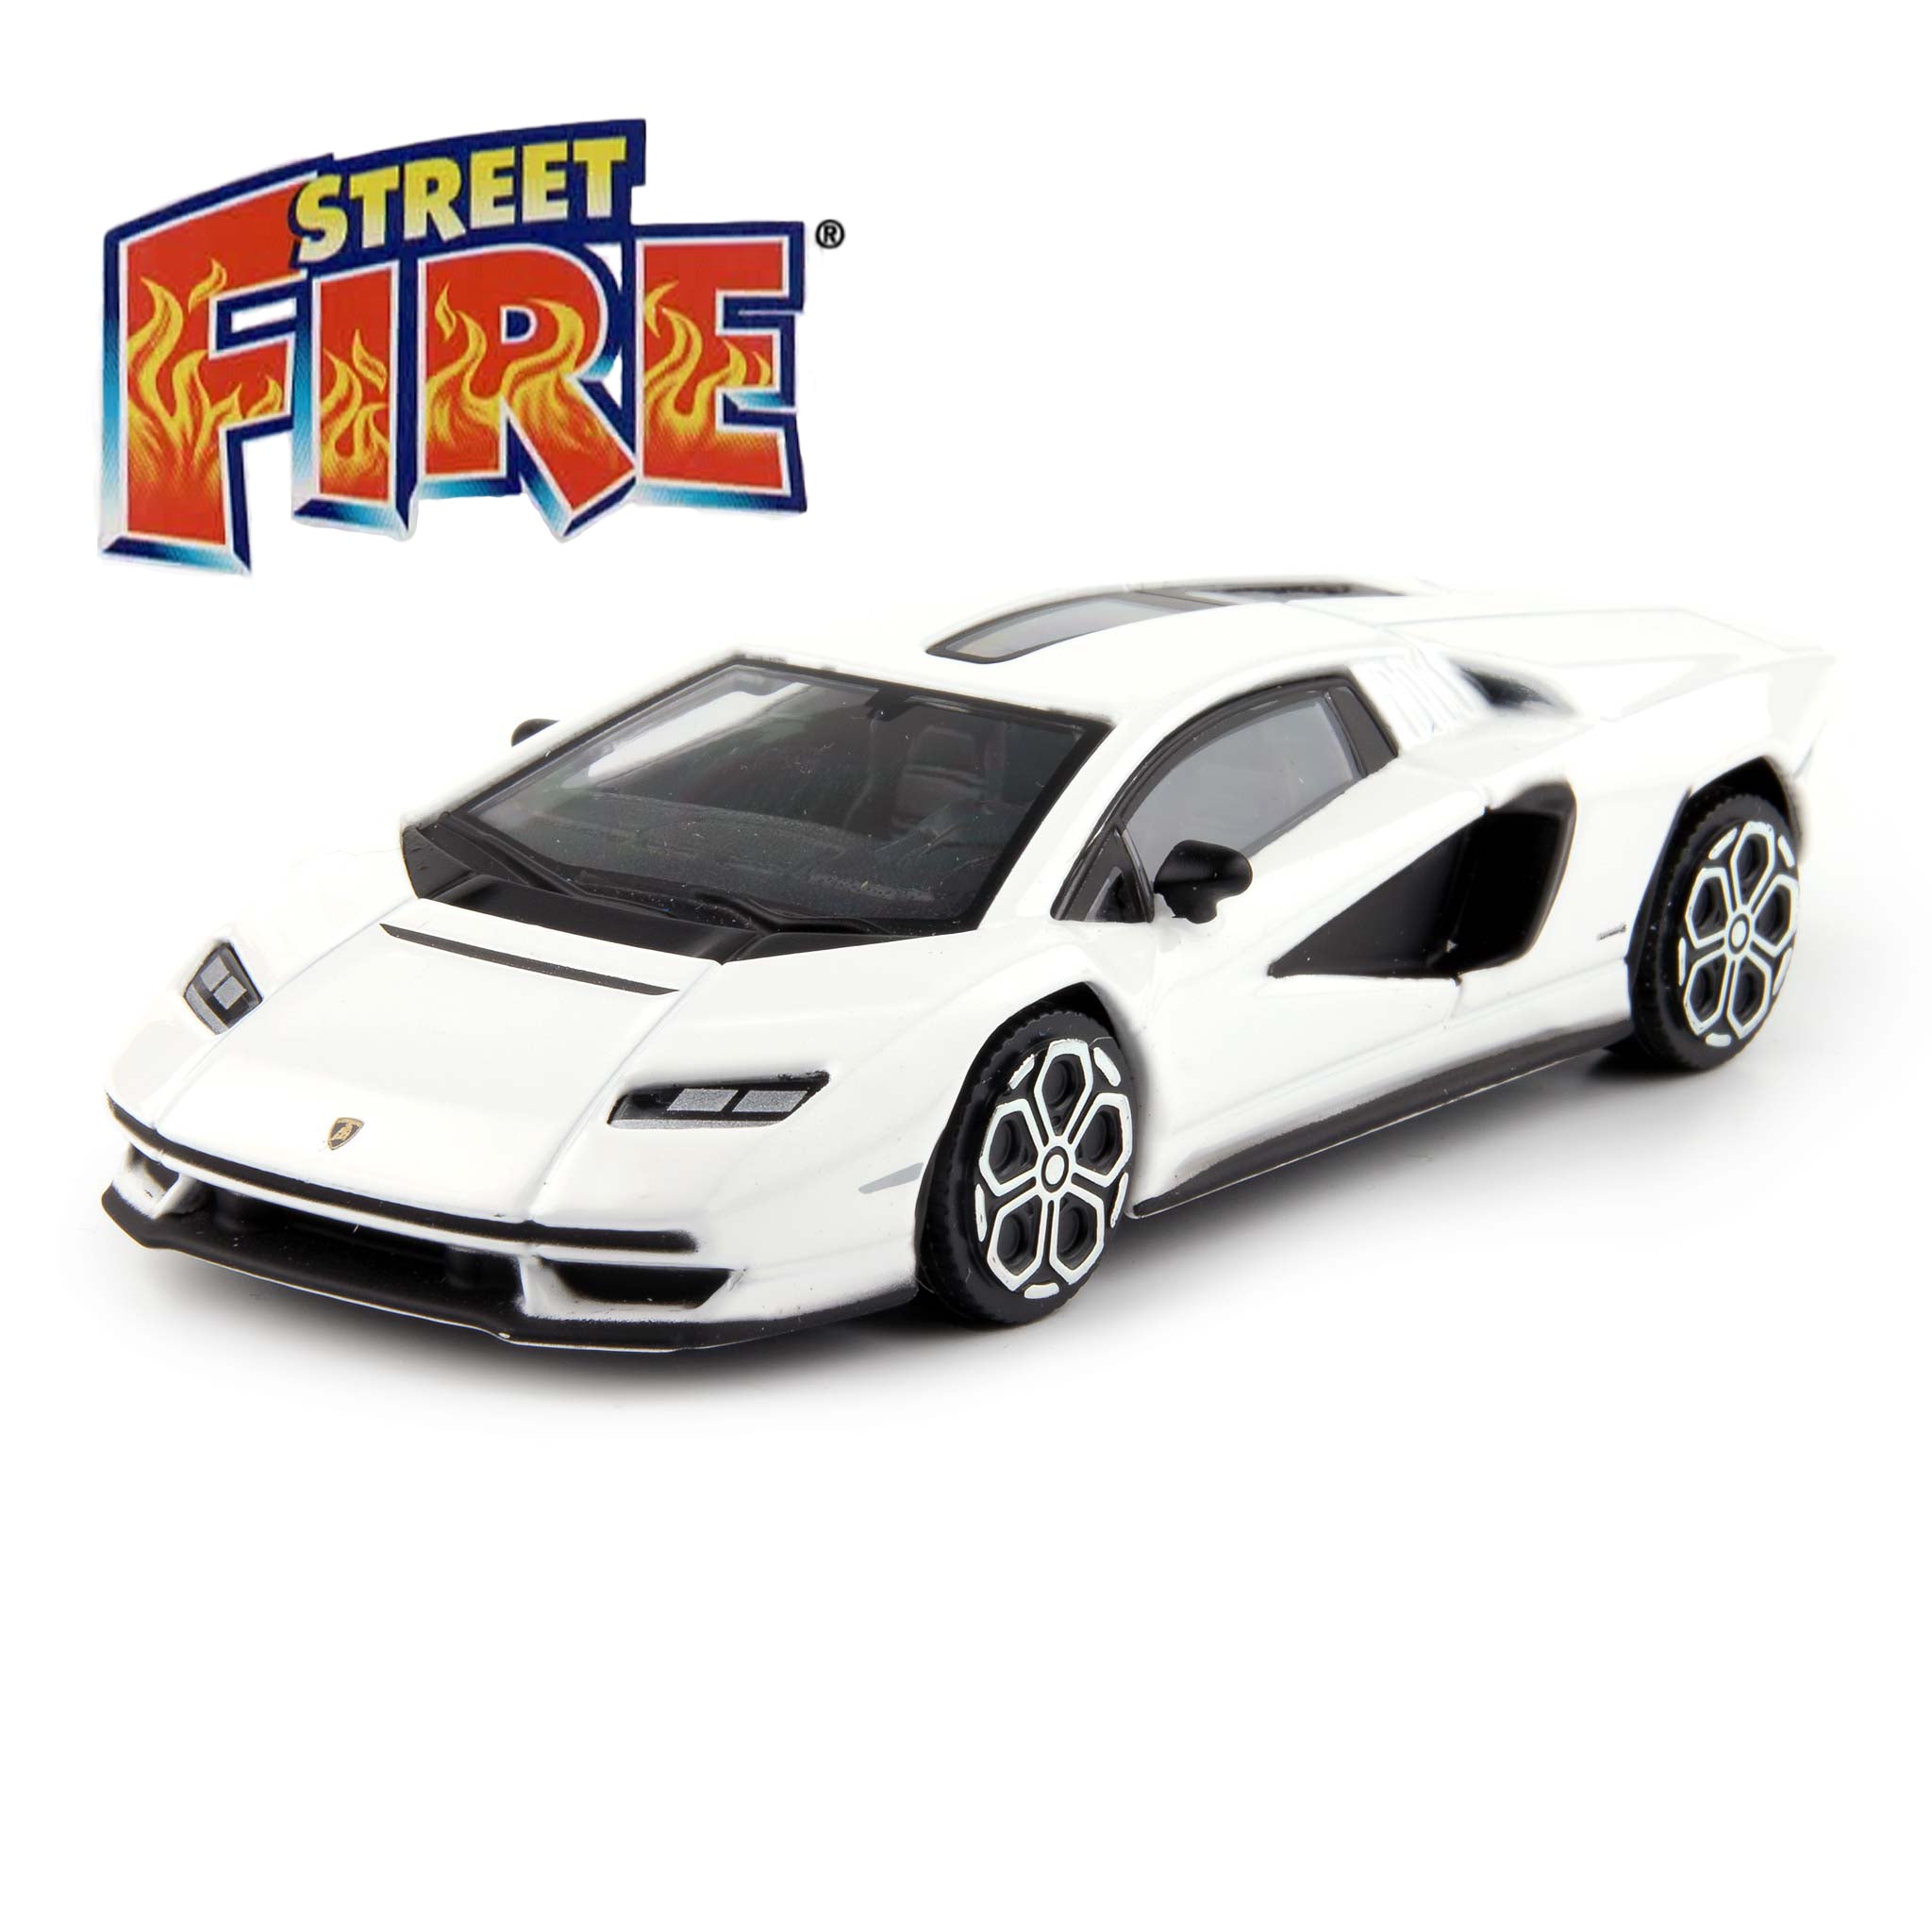 Lamborghini Countach LPI 800-4 2022 white - 1:43 Scale Diecast Toy Car-Bburago-Diecast Model Centre